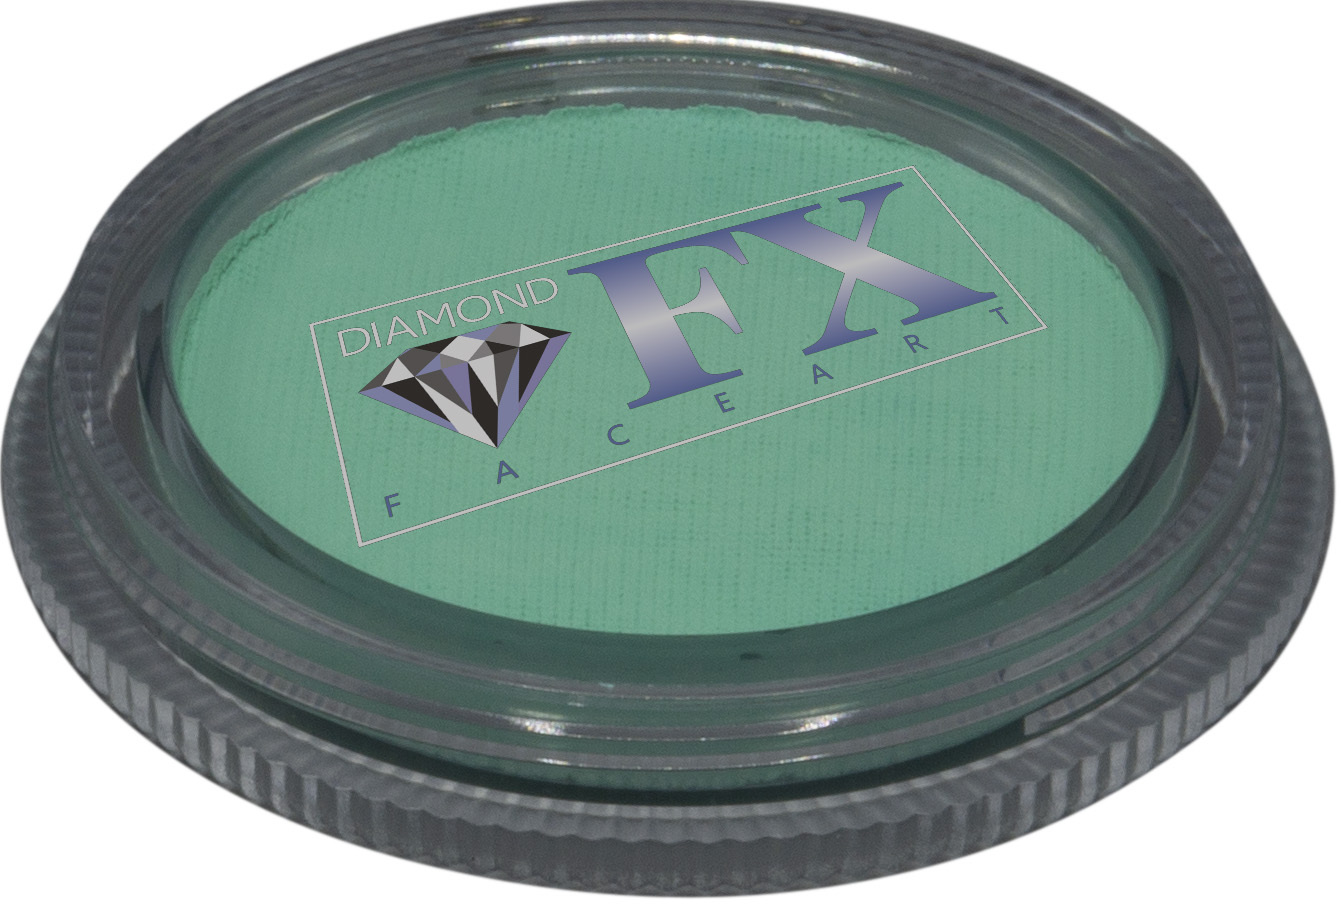 Diamond FX Pale Green 30g - Small Image